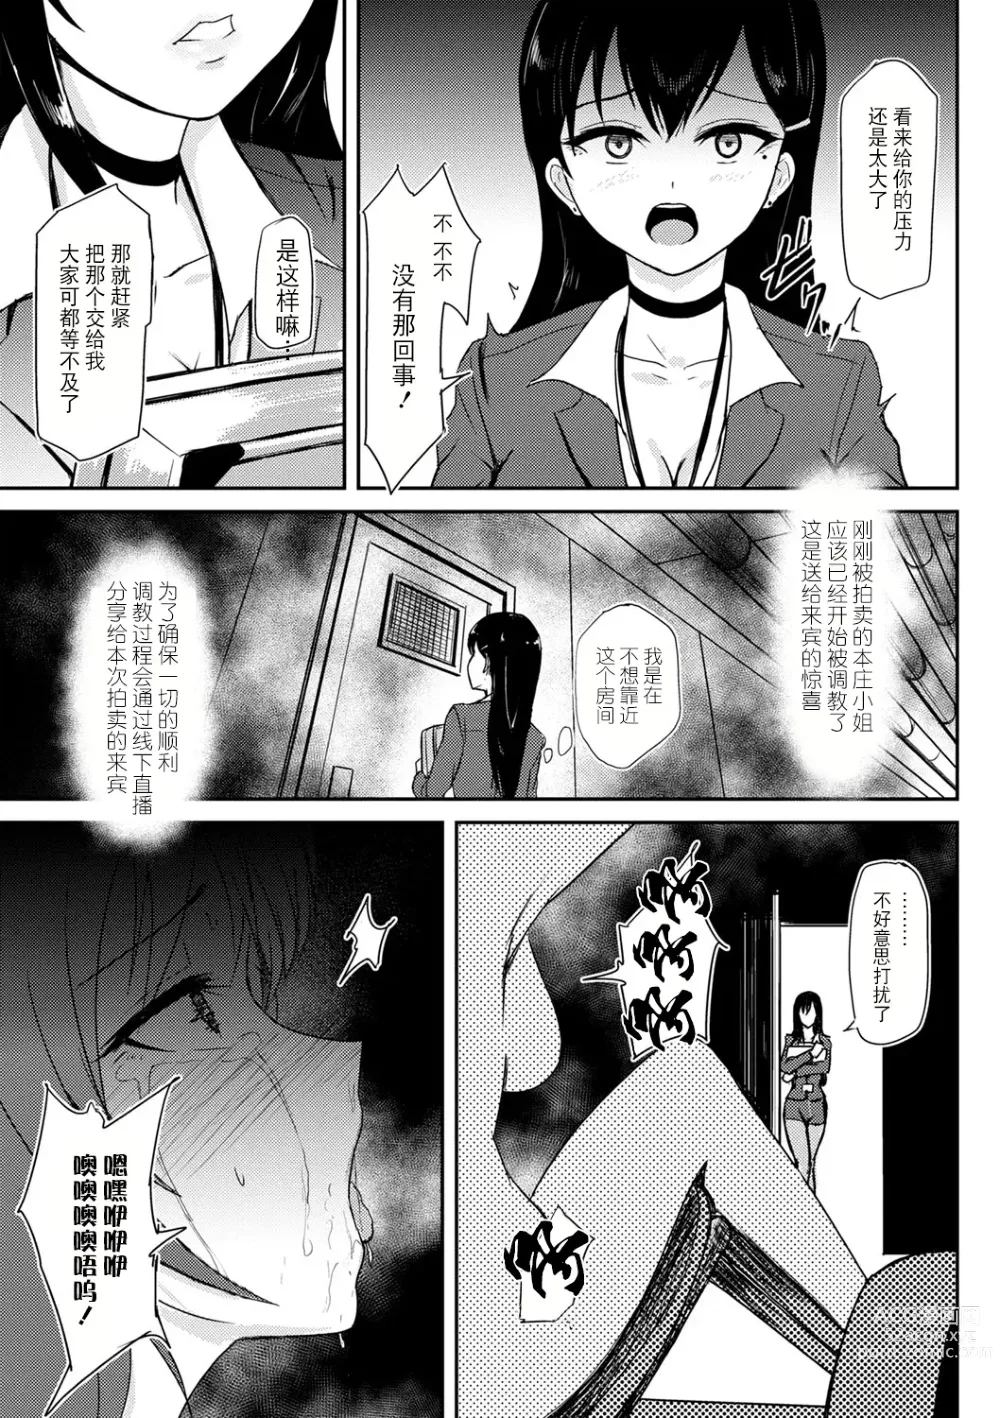 Page 3 of manga Slave Presentation